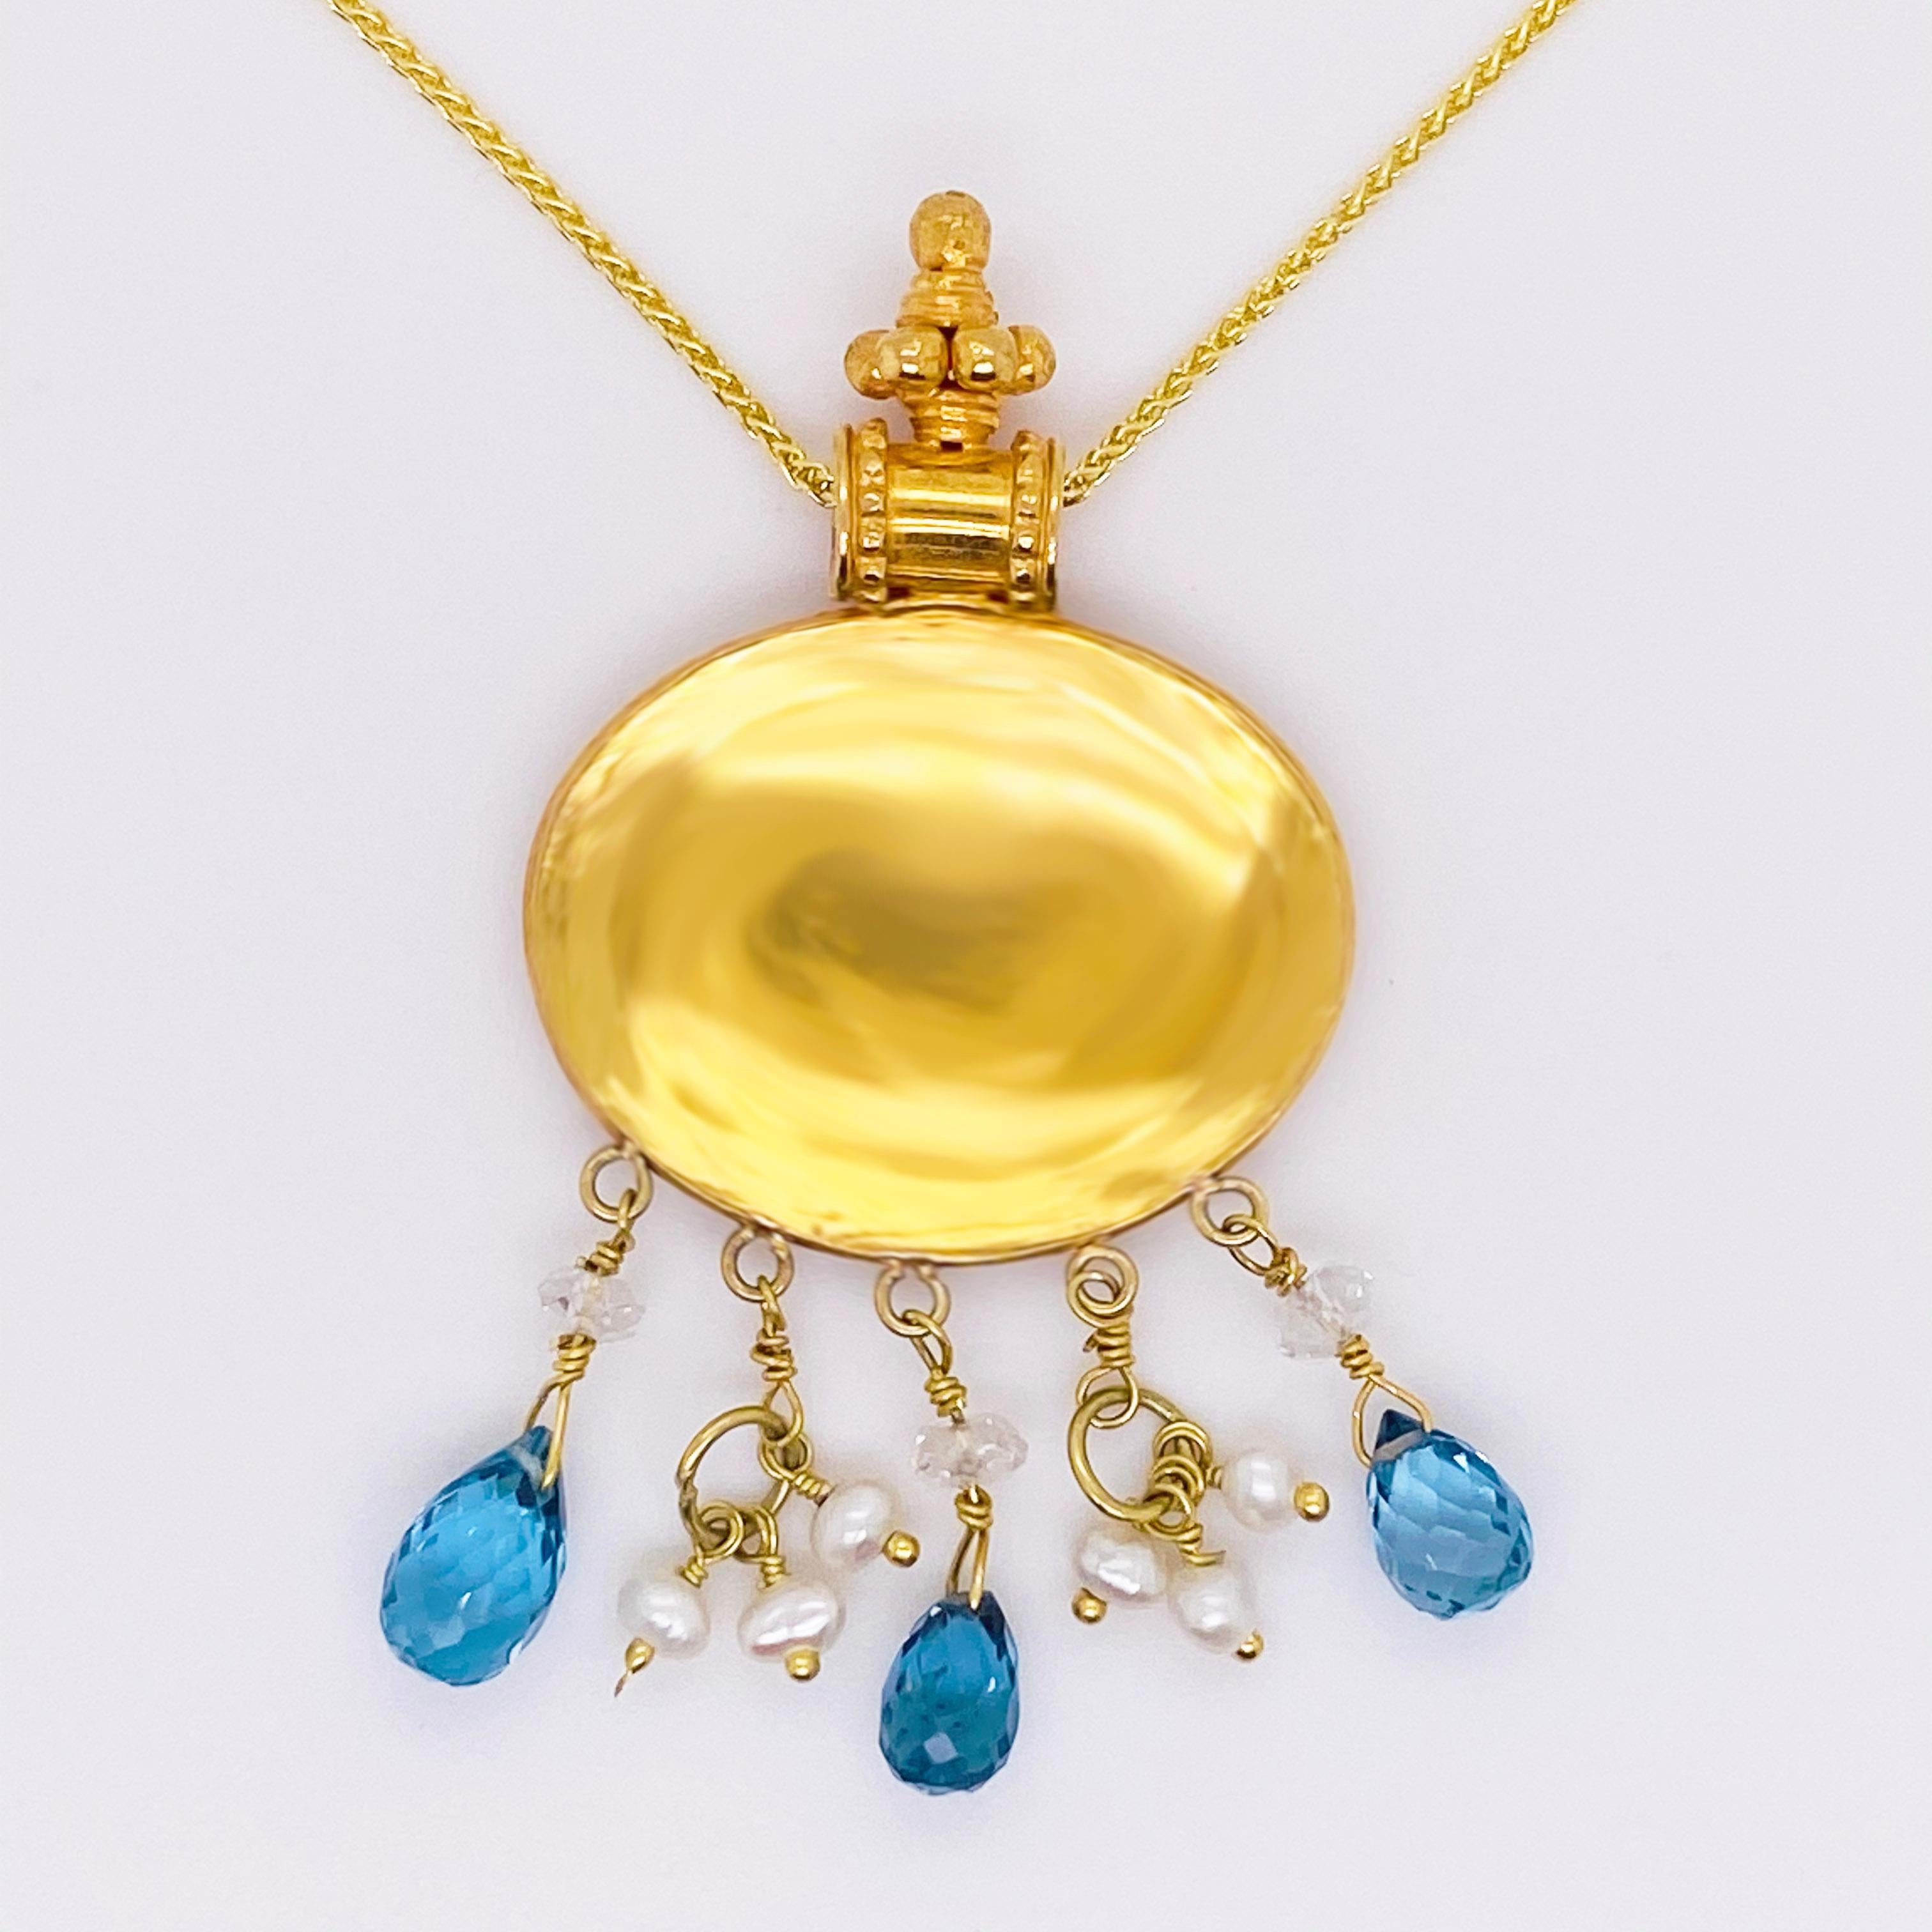 Briolette Cut 22k Gold Necklace Blue Topaz, Seed Pearls, Clear Quartz Pendant, Fancy Box Chain